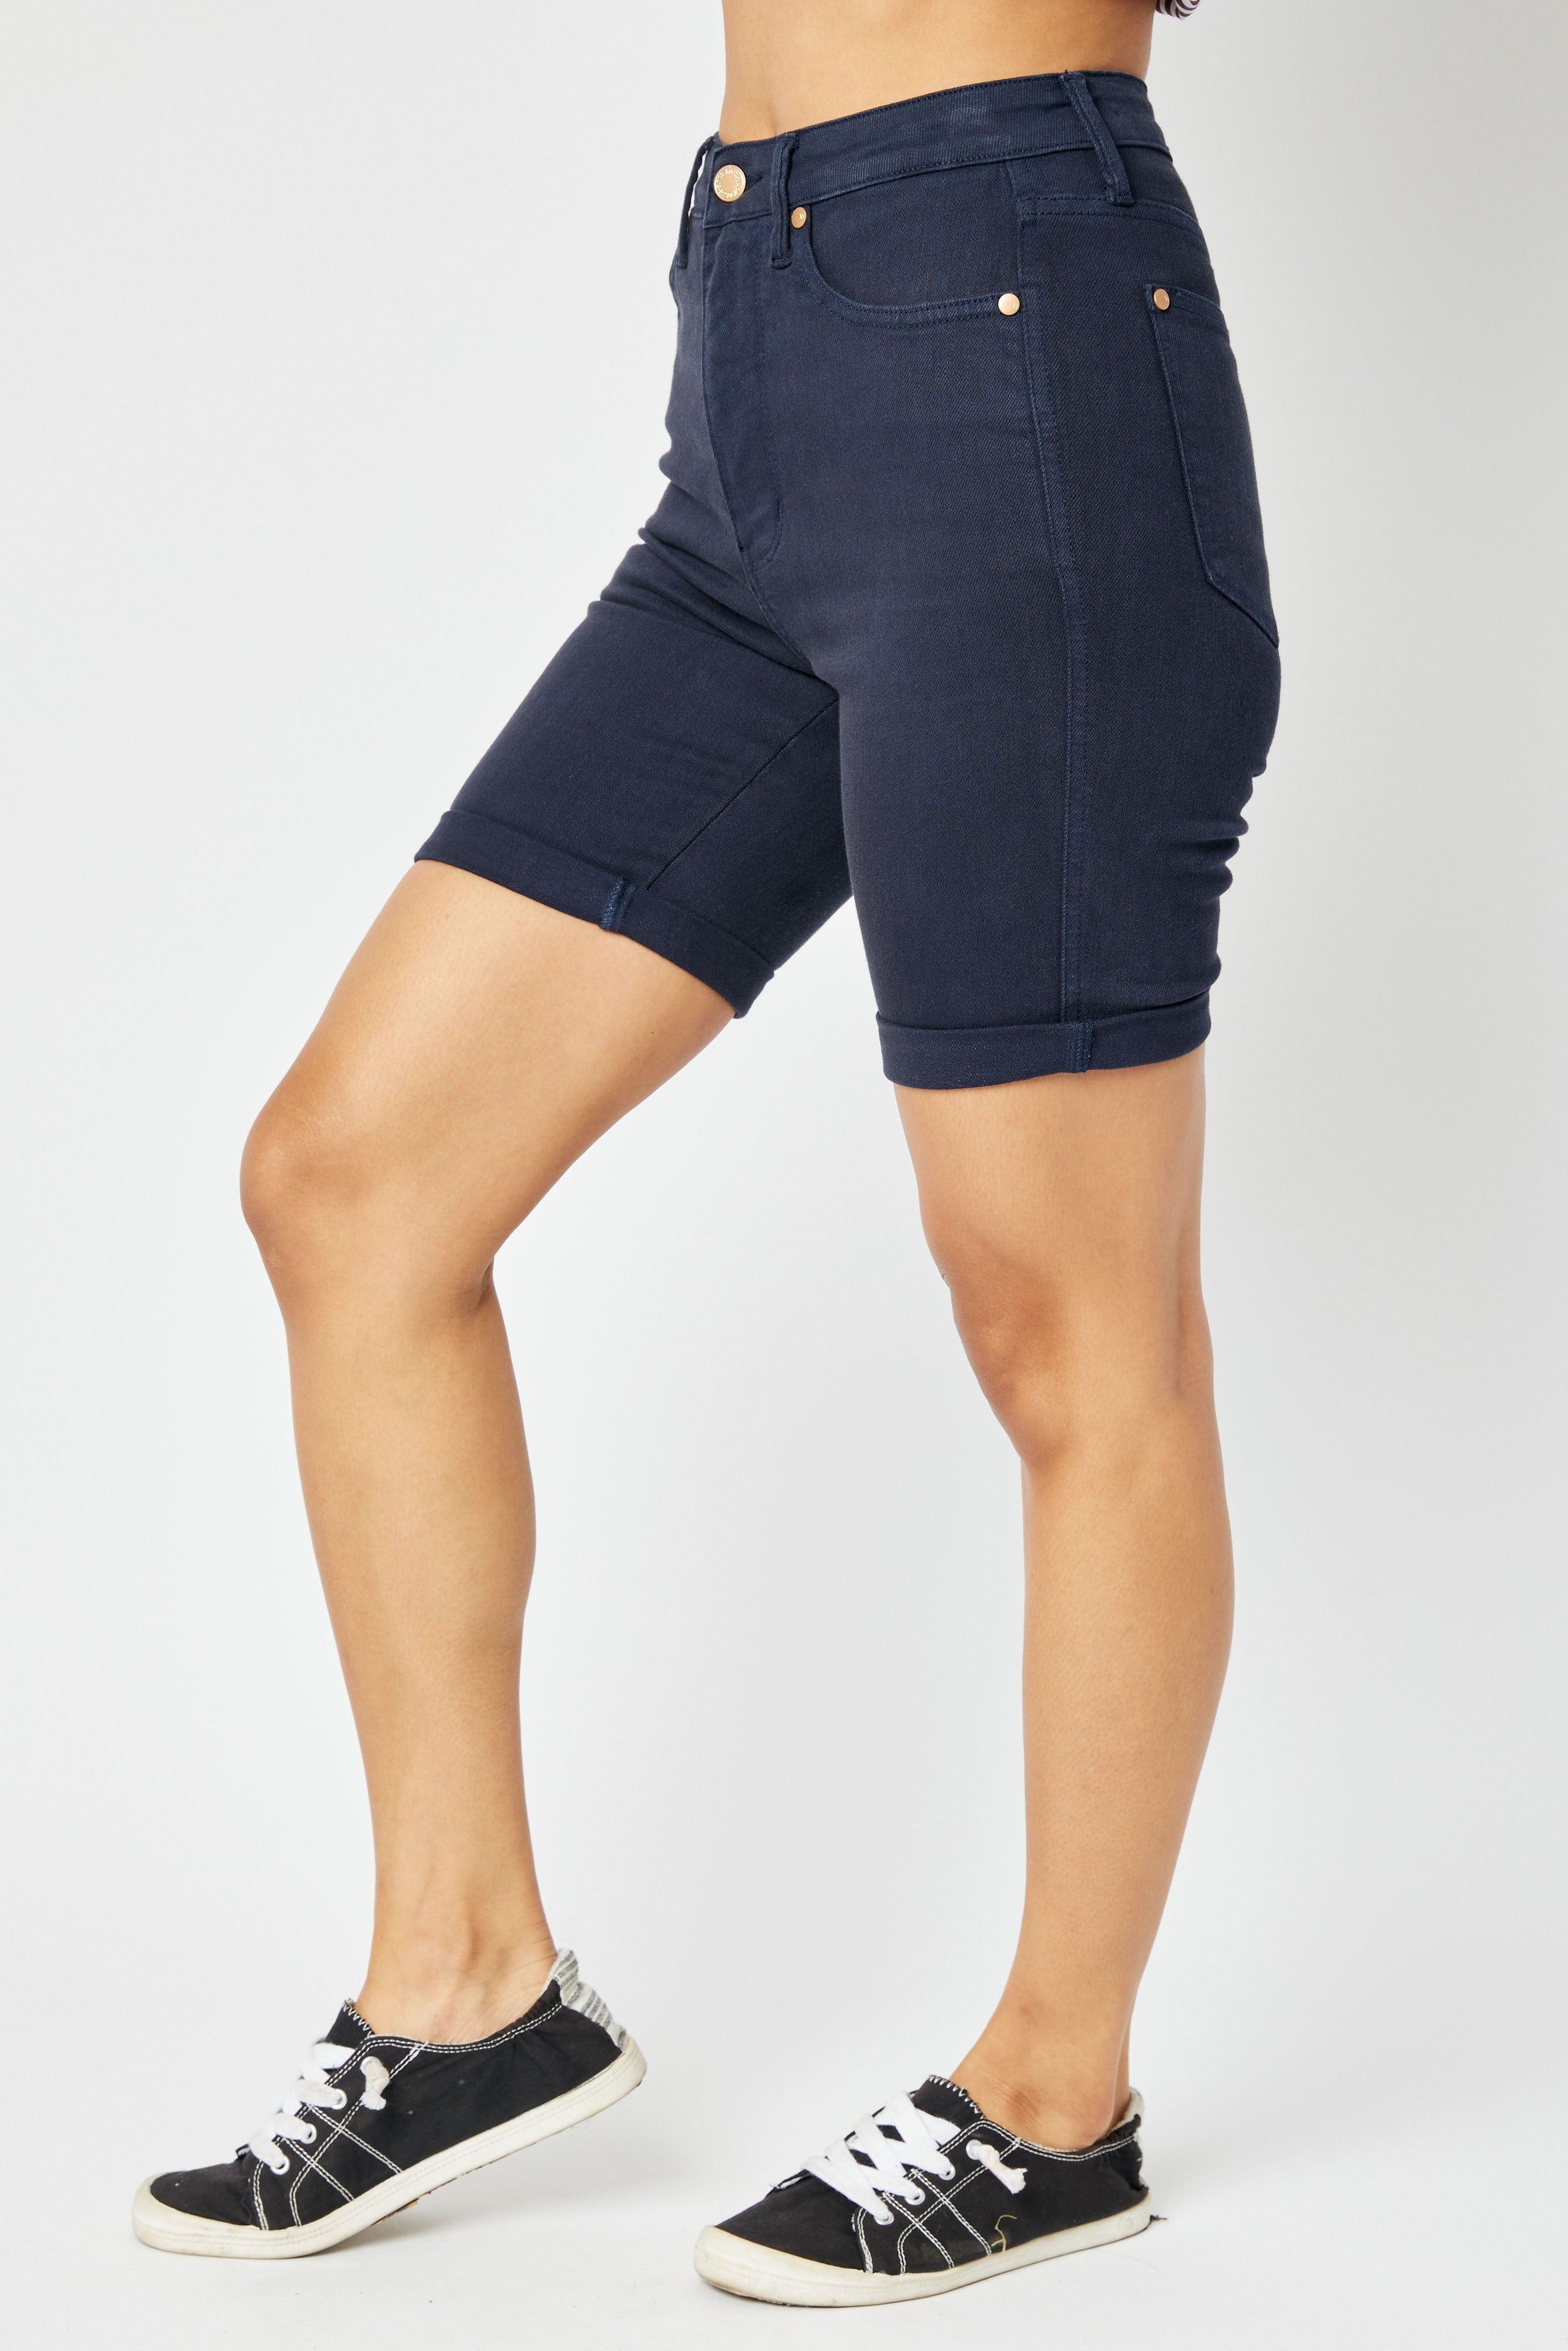 Judy Blue Navy High Waist Tummy Control Bermuda Shorts Trendsi